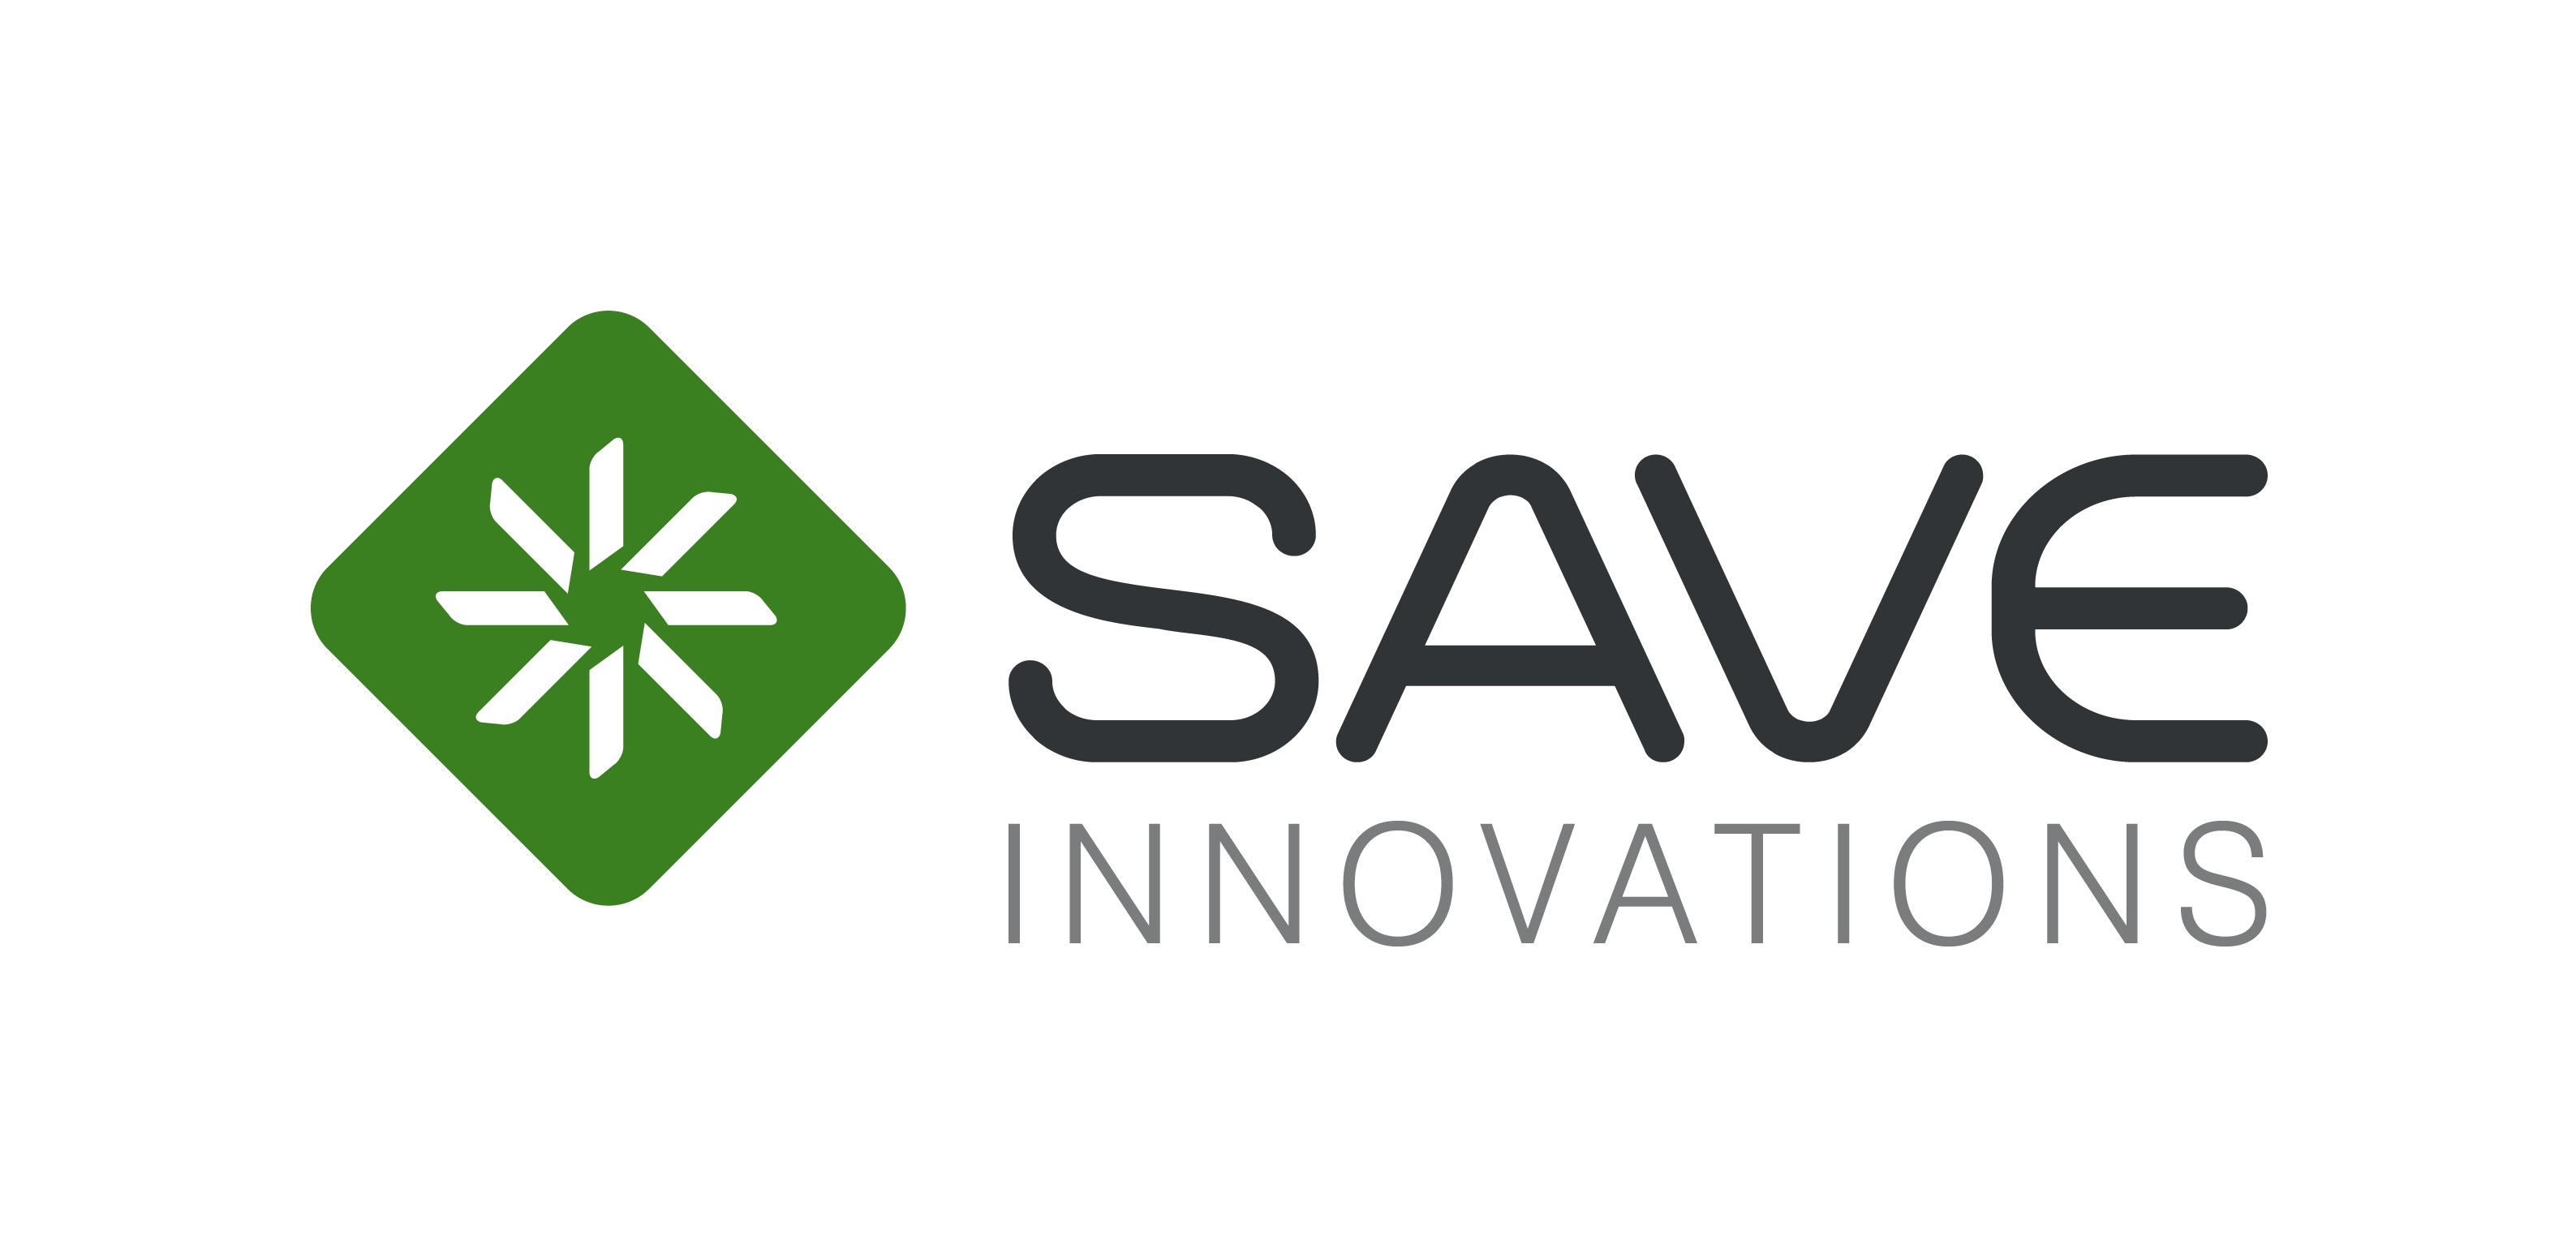 Save innovations